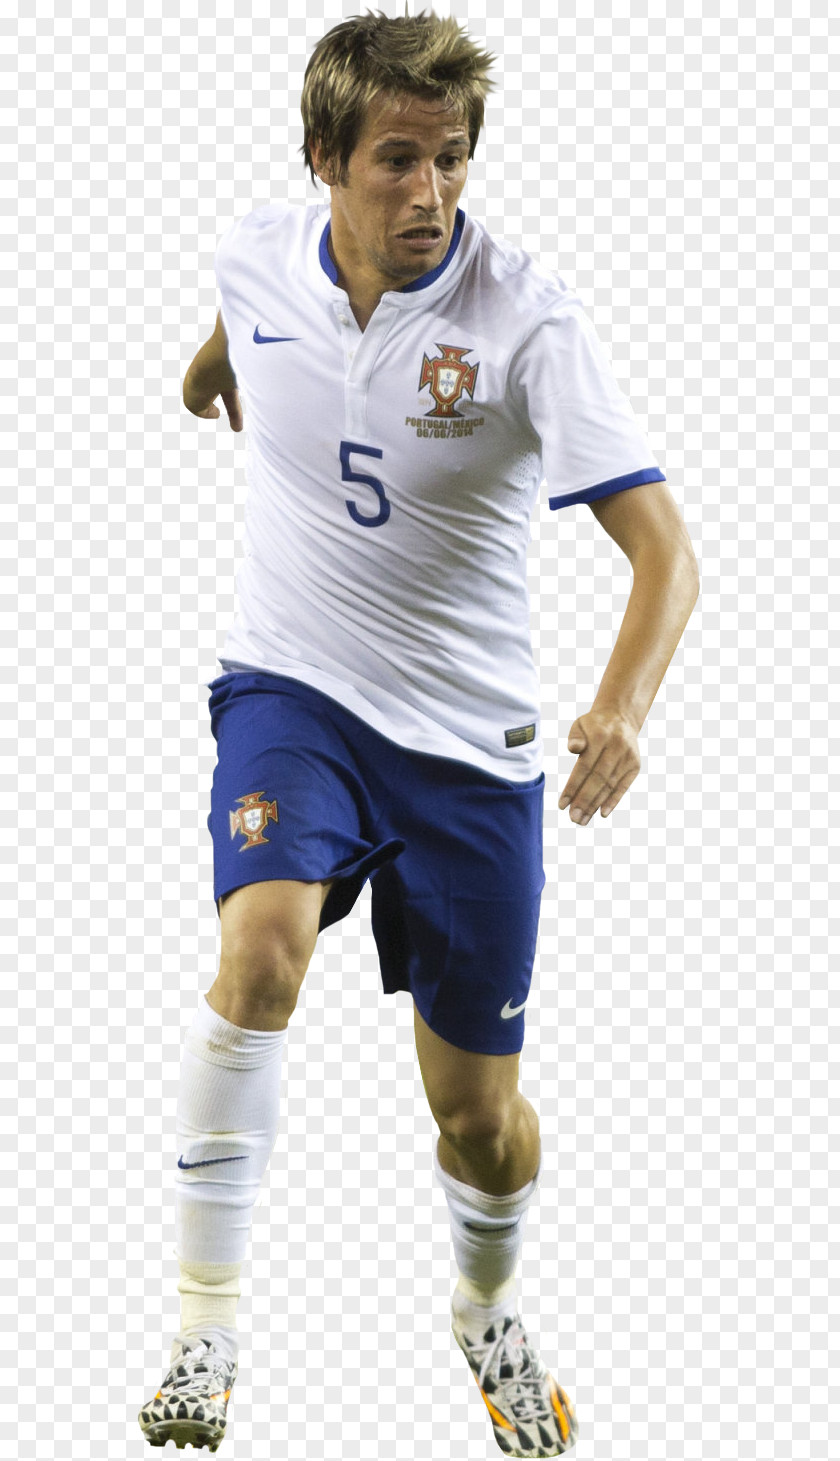 Mario Balotelli 2014 FIFA World Cup Fábio Coentrão Football Player Portugal National Team PNG